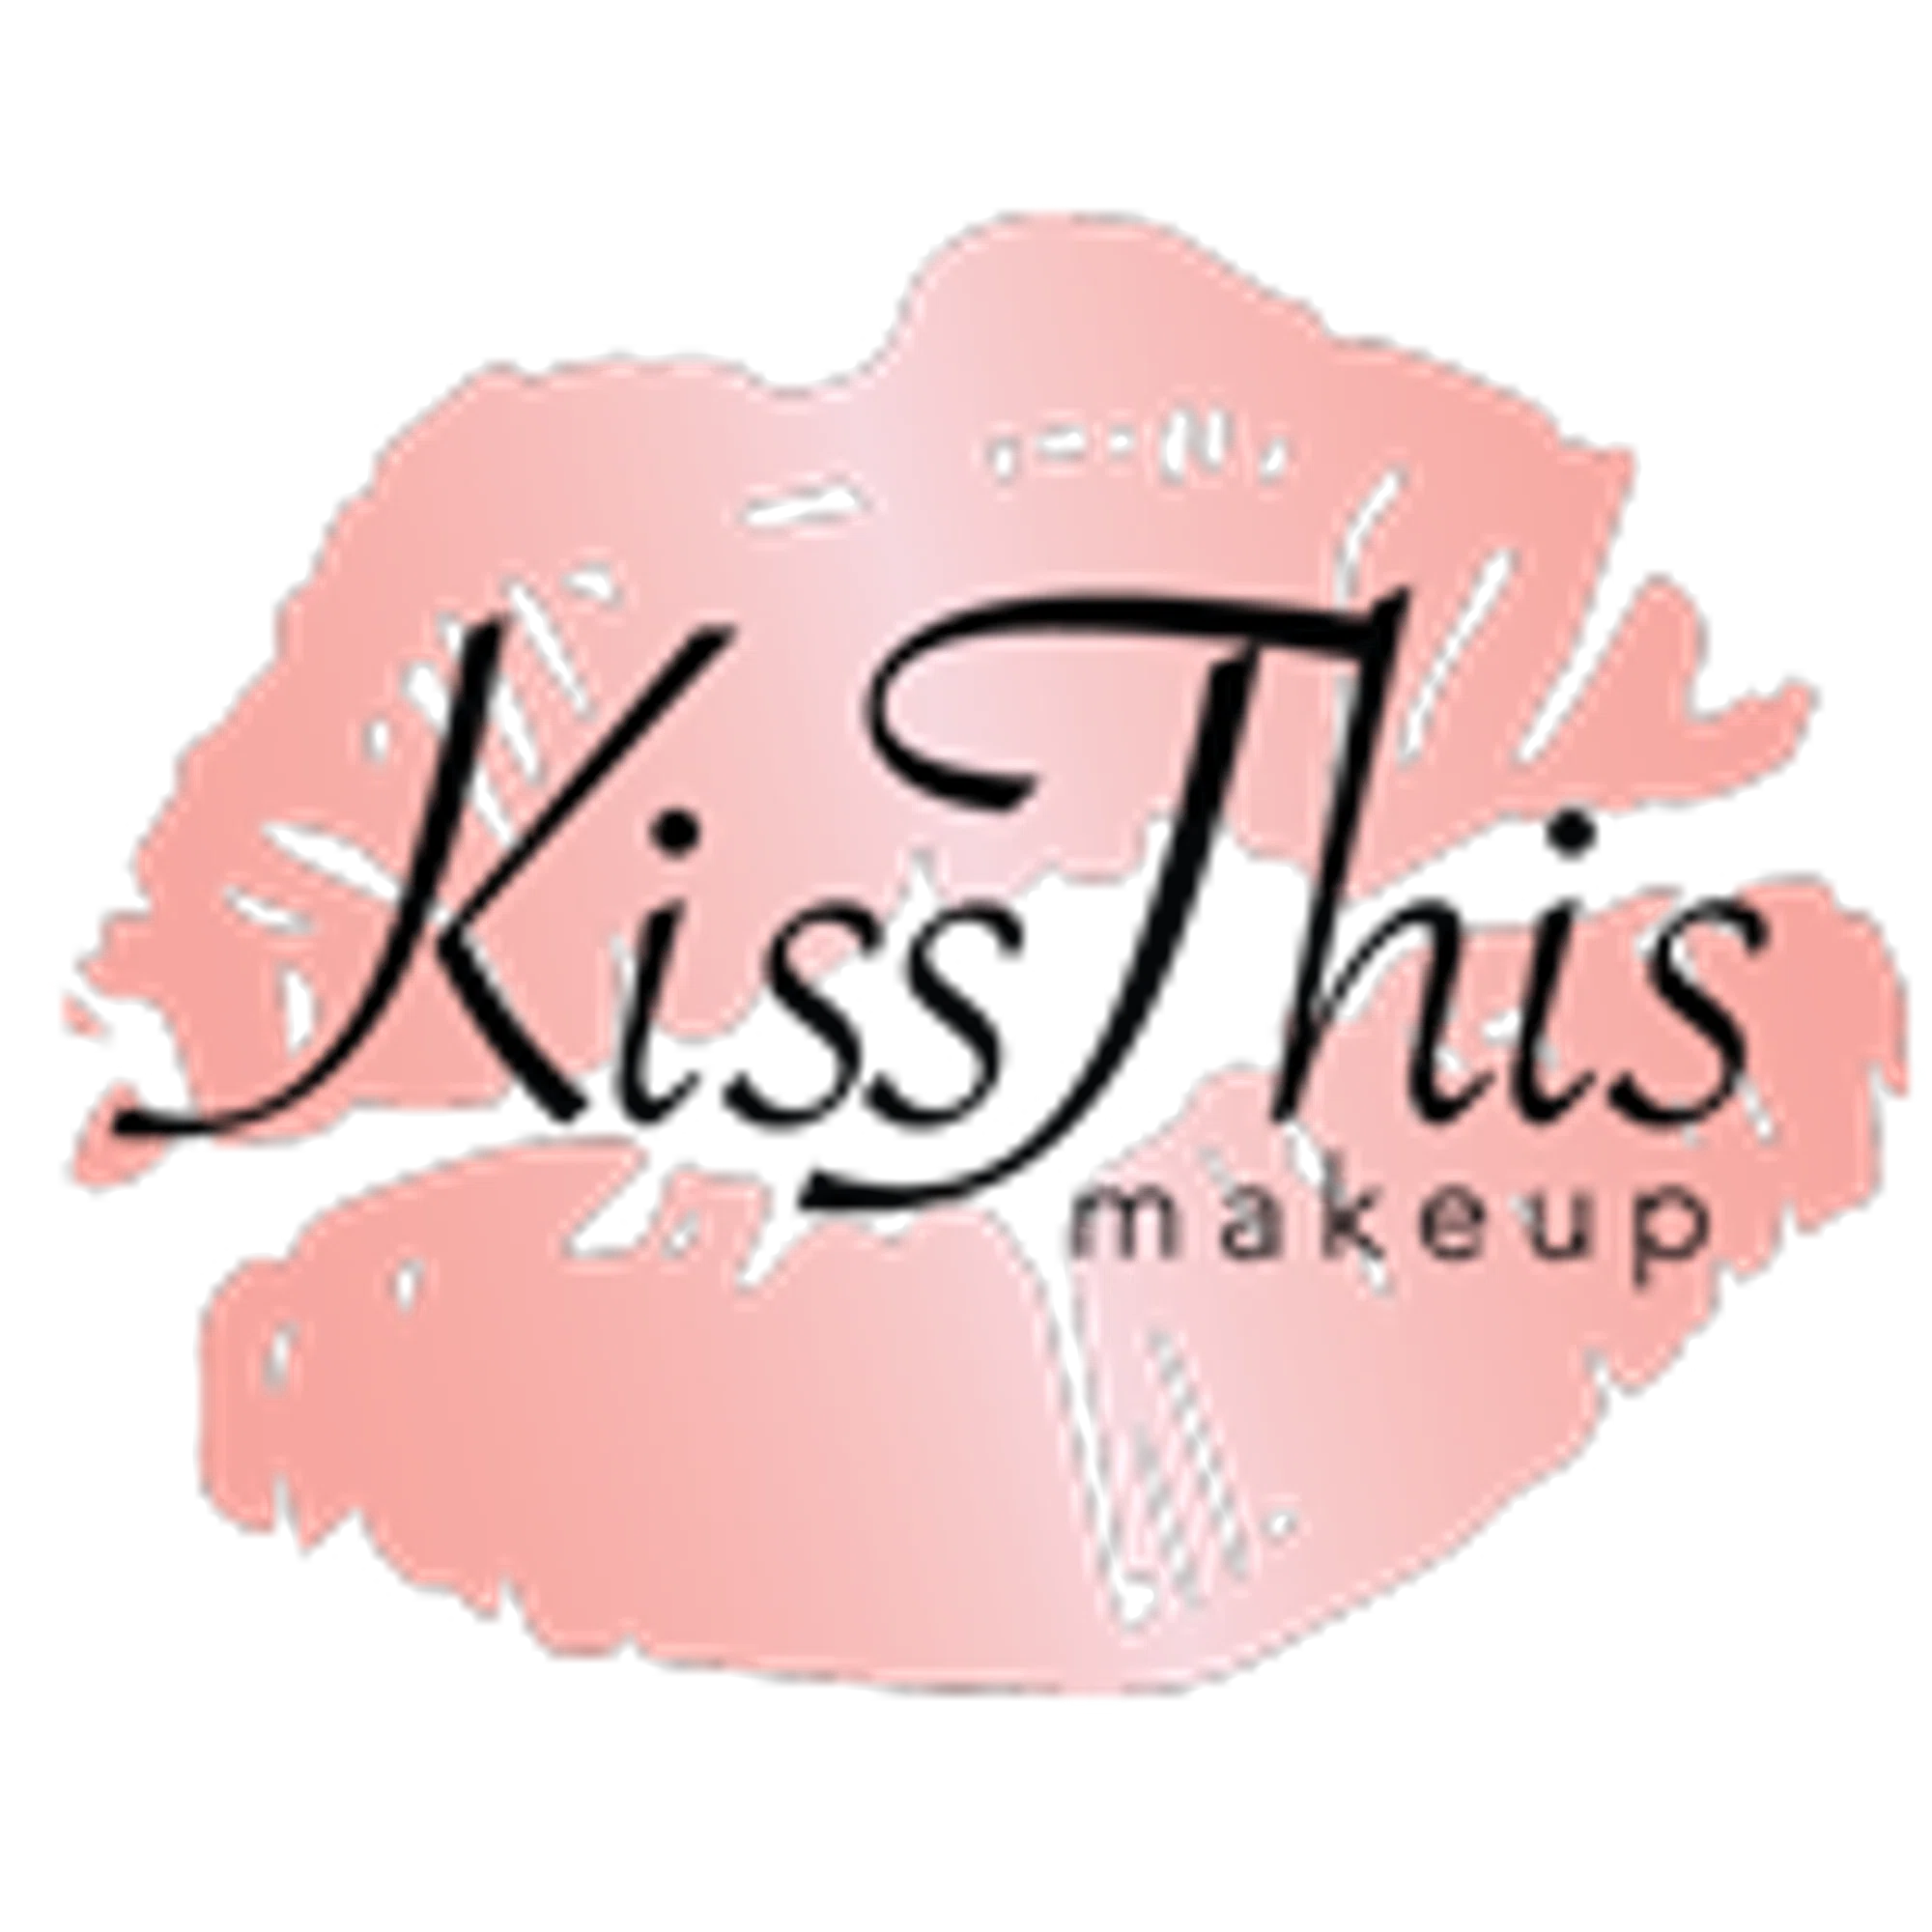 Kiss This Makeup